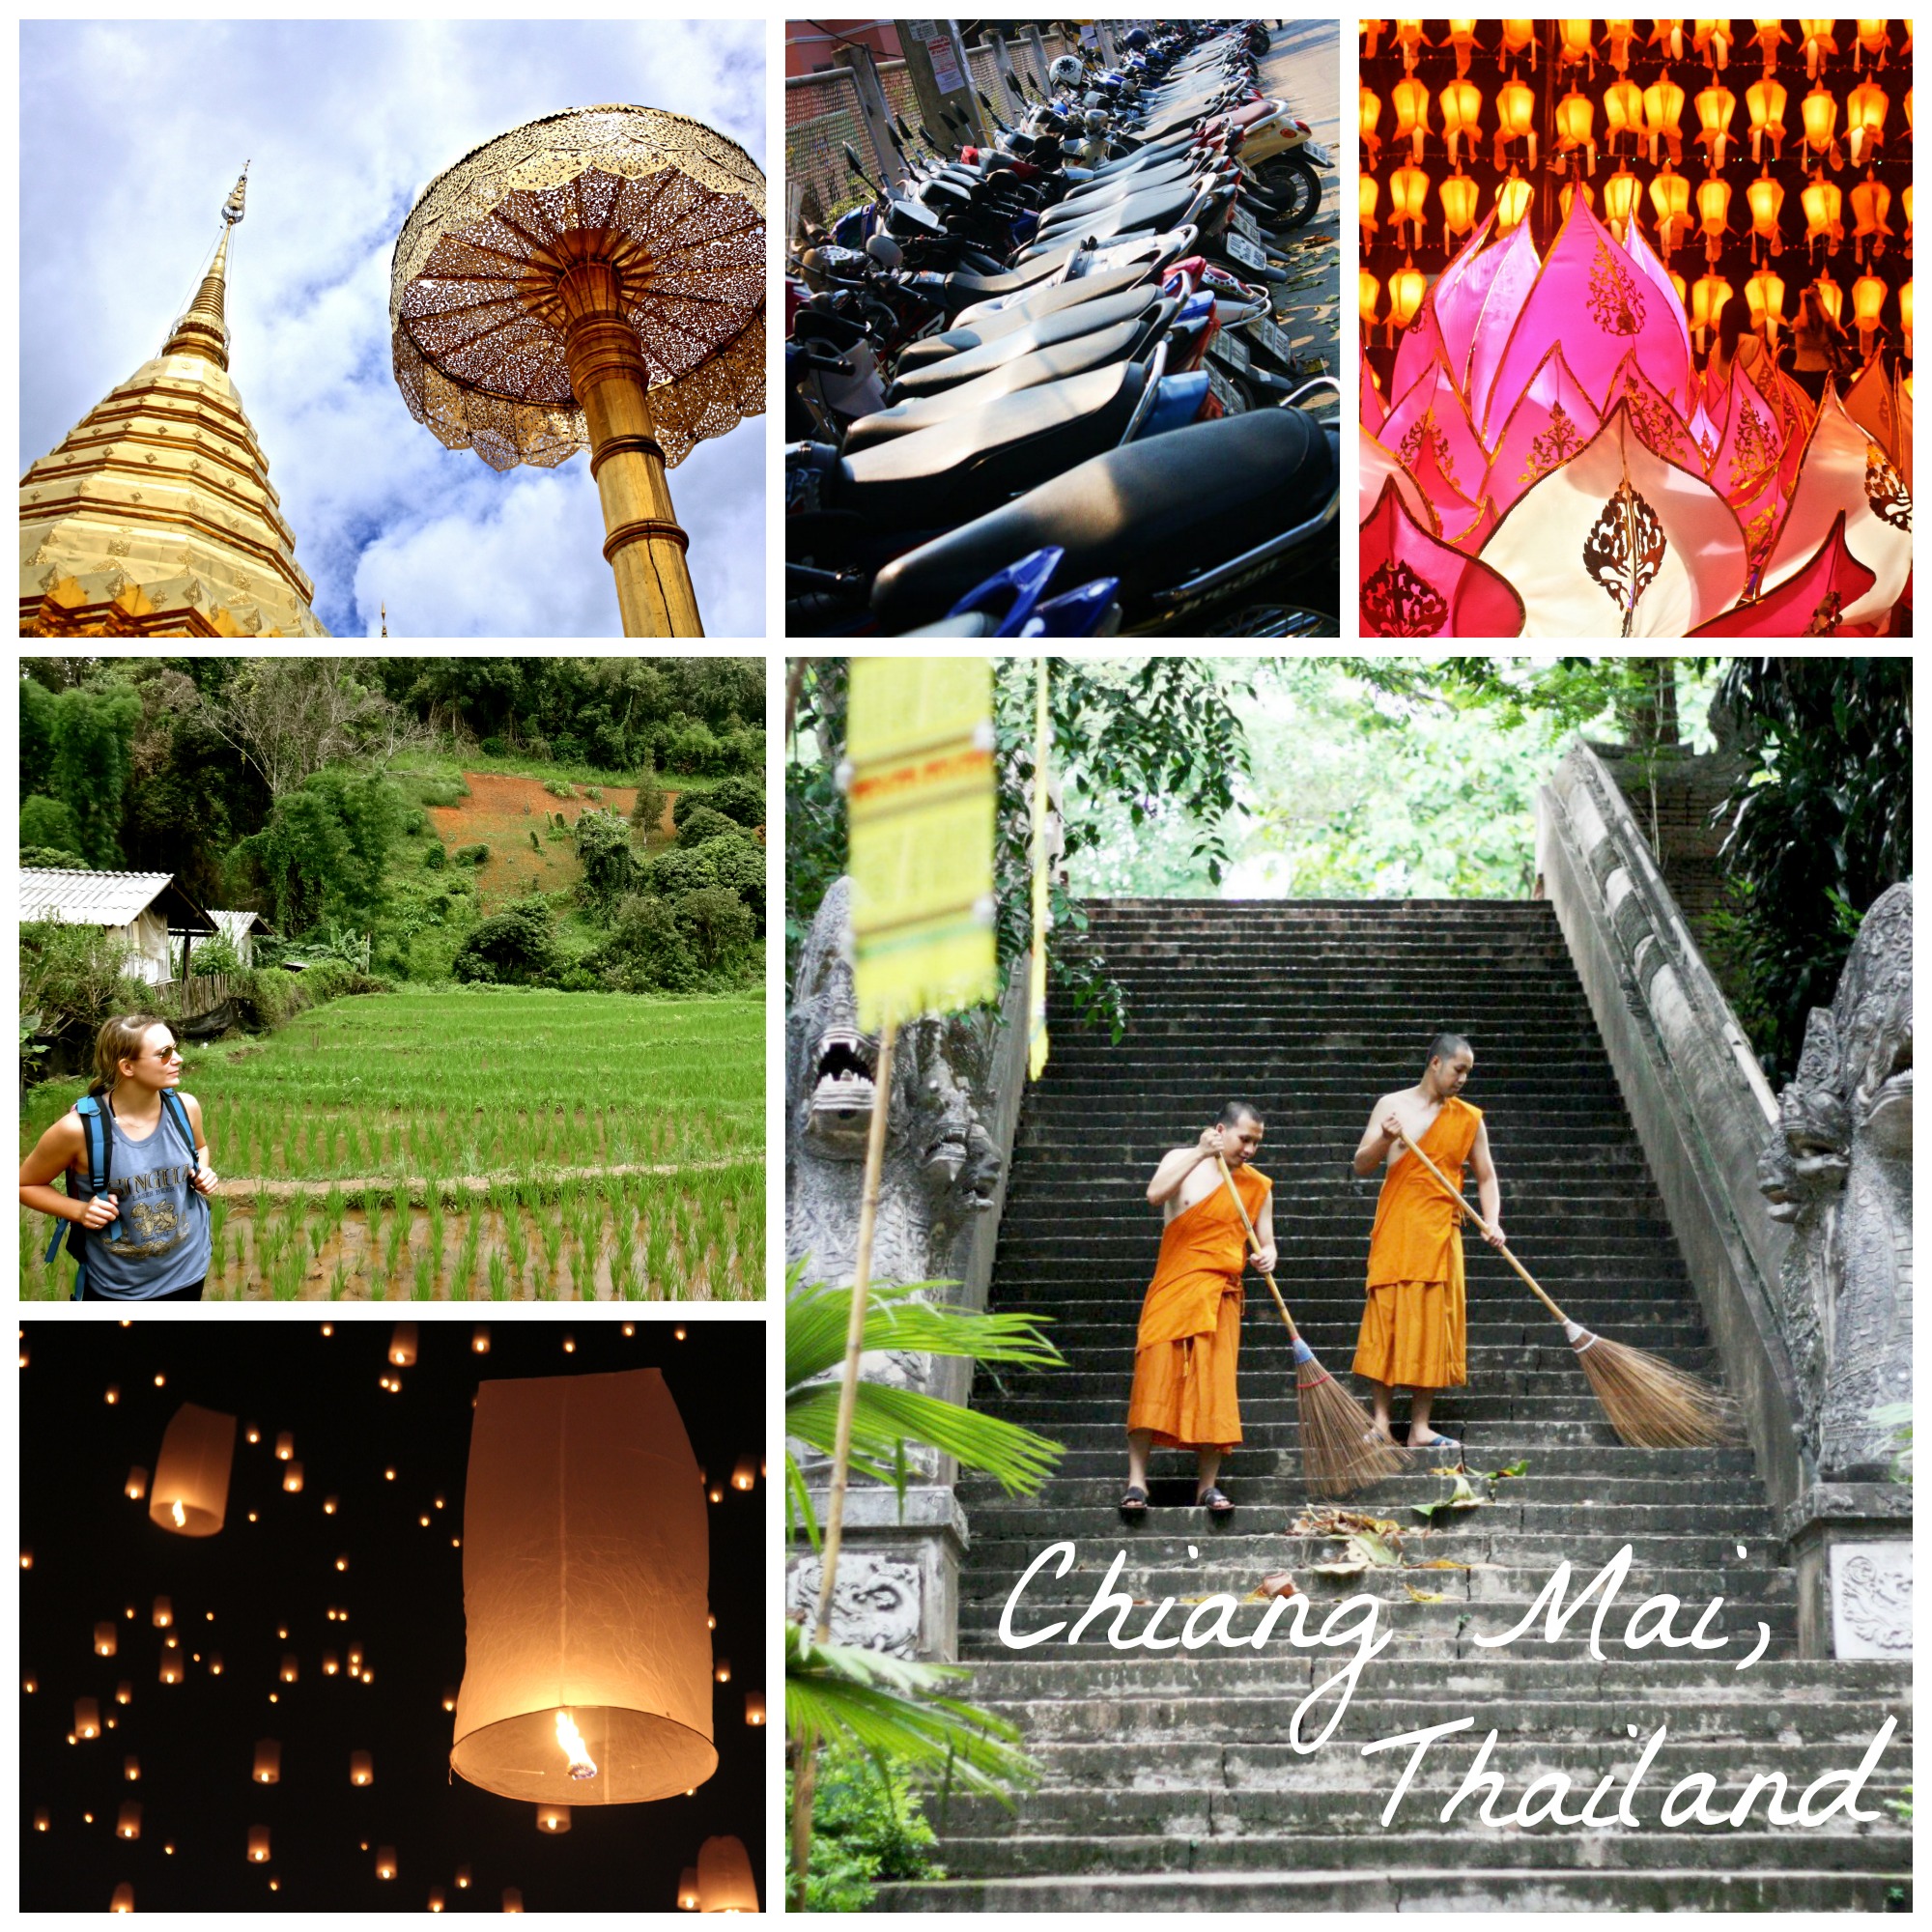 Top Travel Destination: Chiang Mai, Thailand